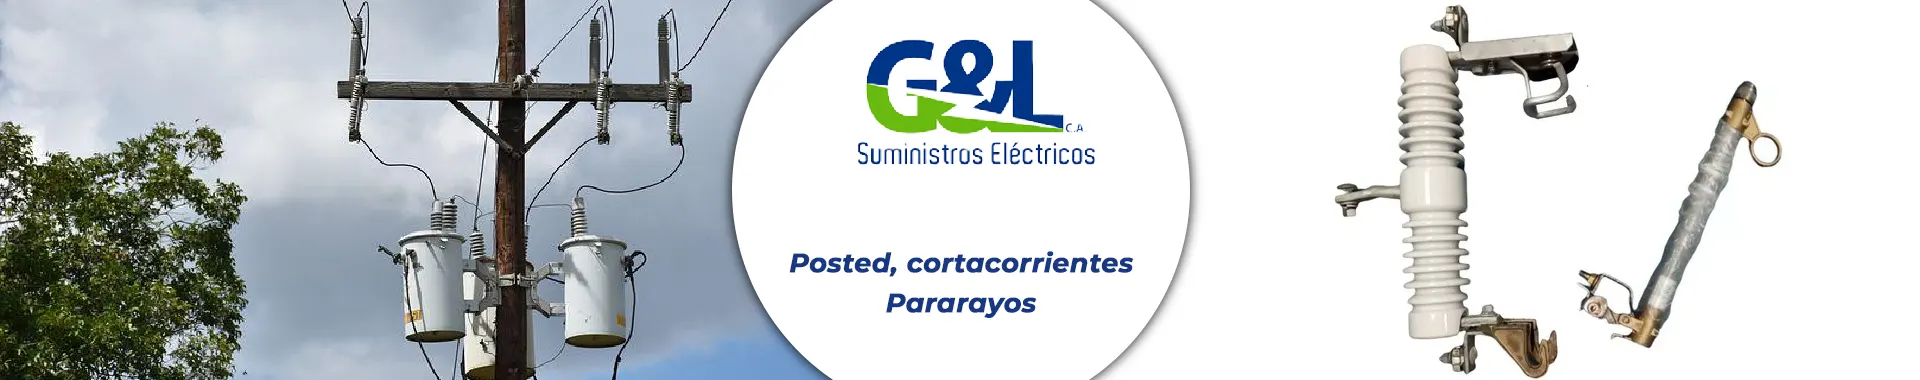 Imagen 5 del perfil de Suministros Eléctricos G&L